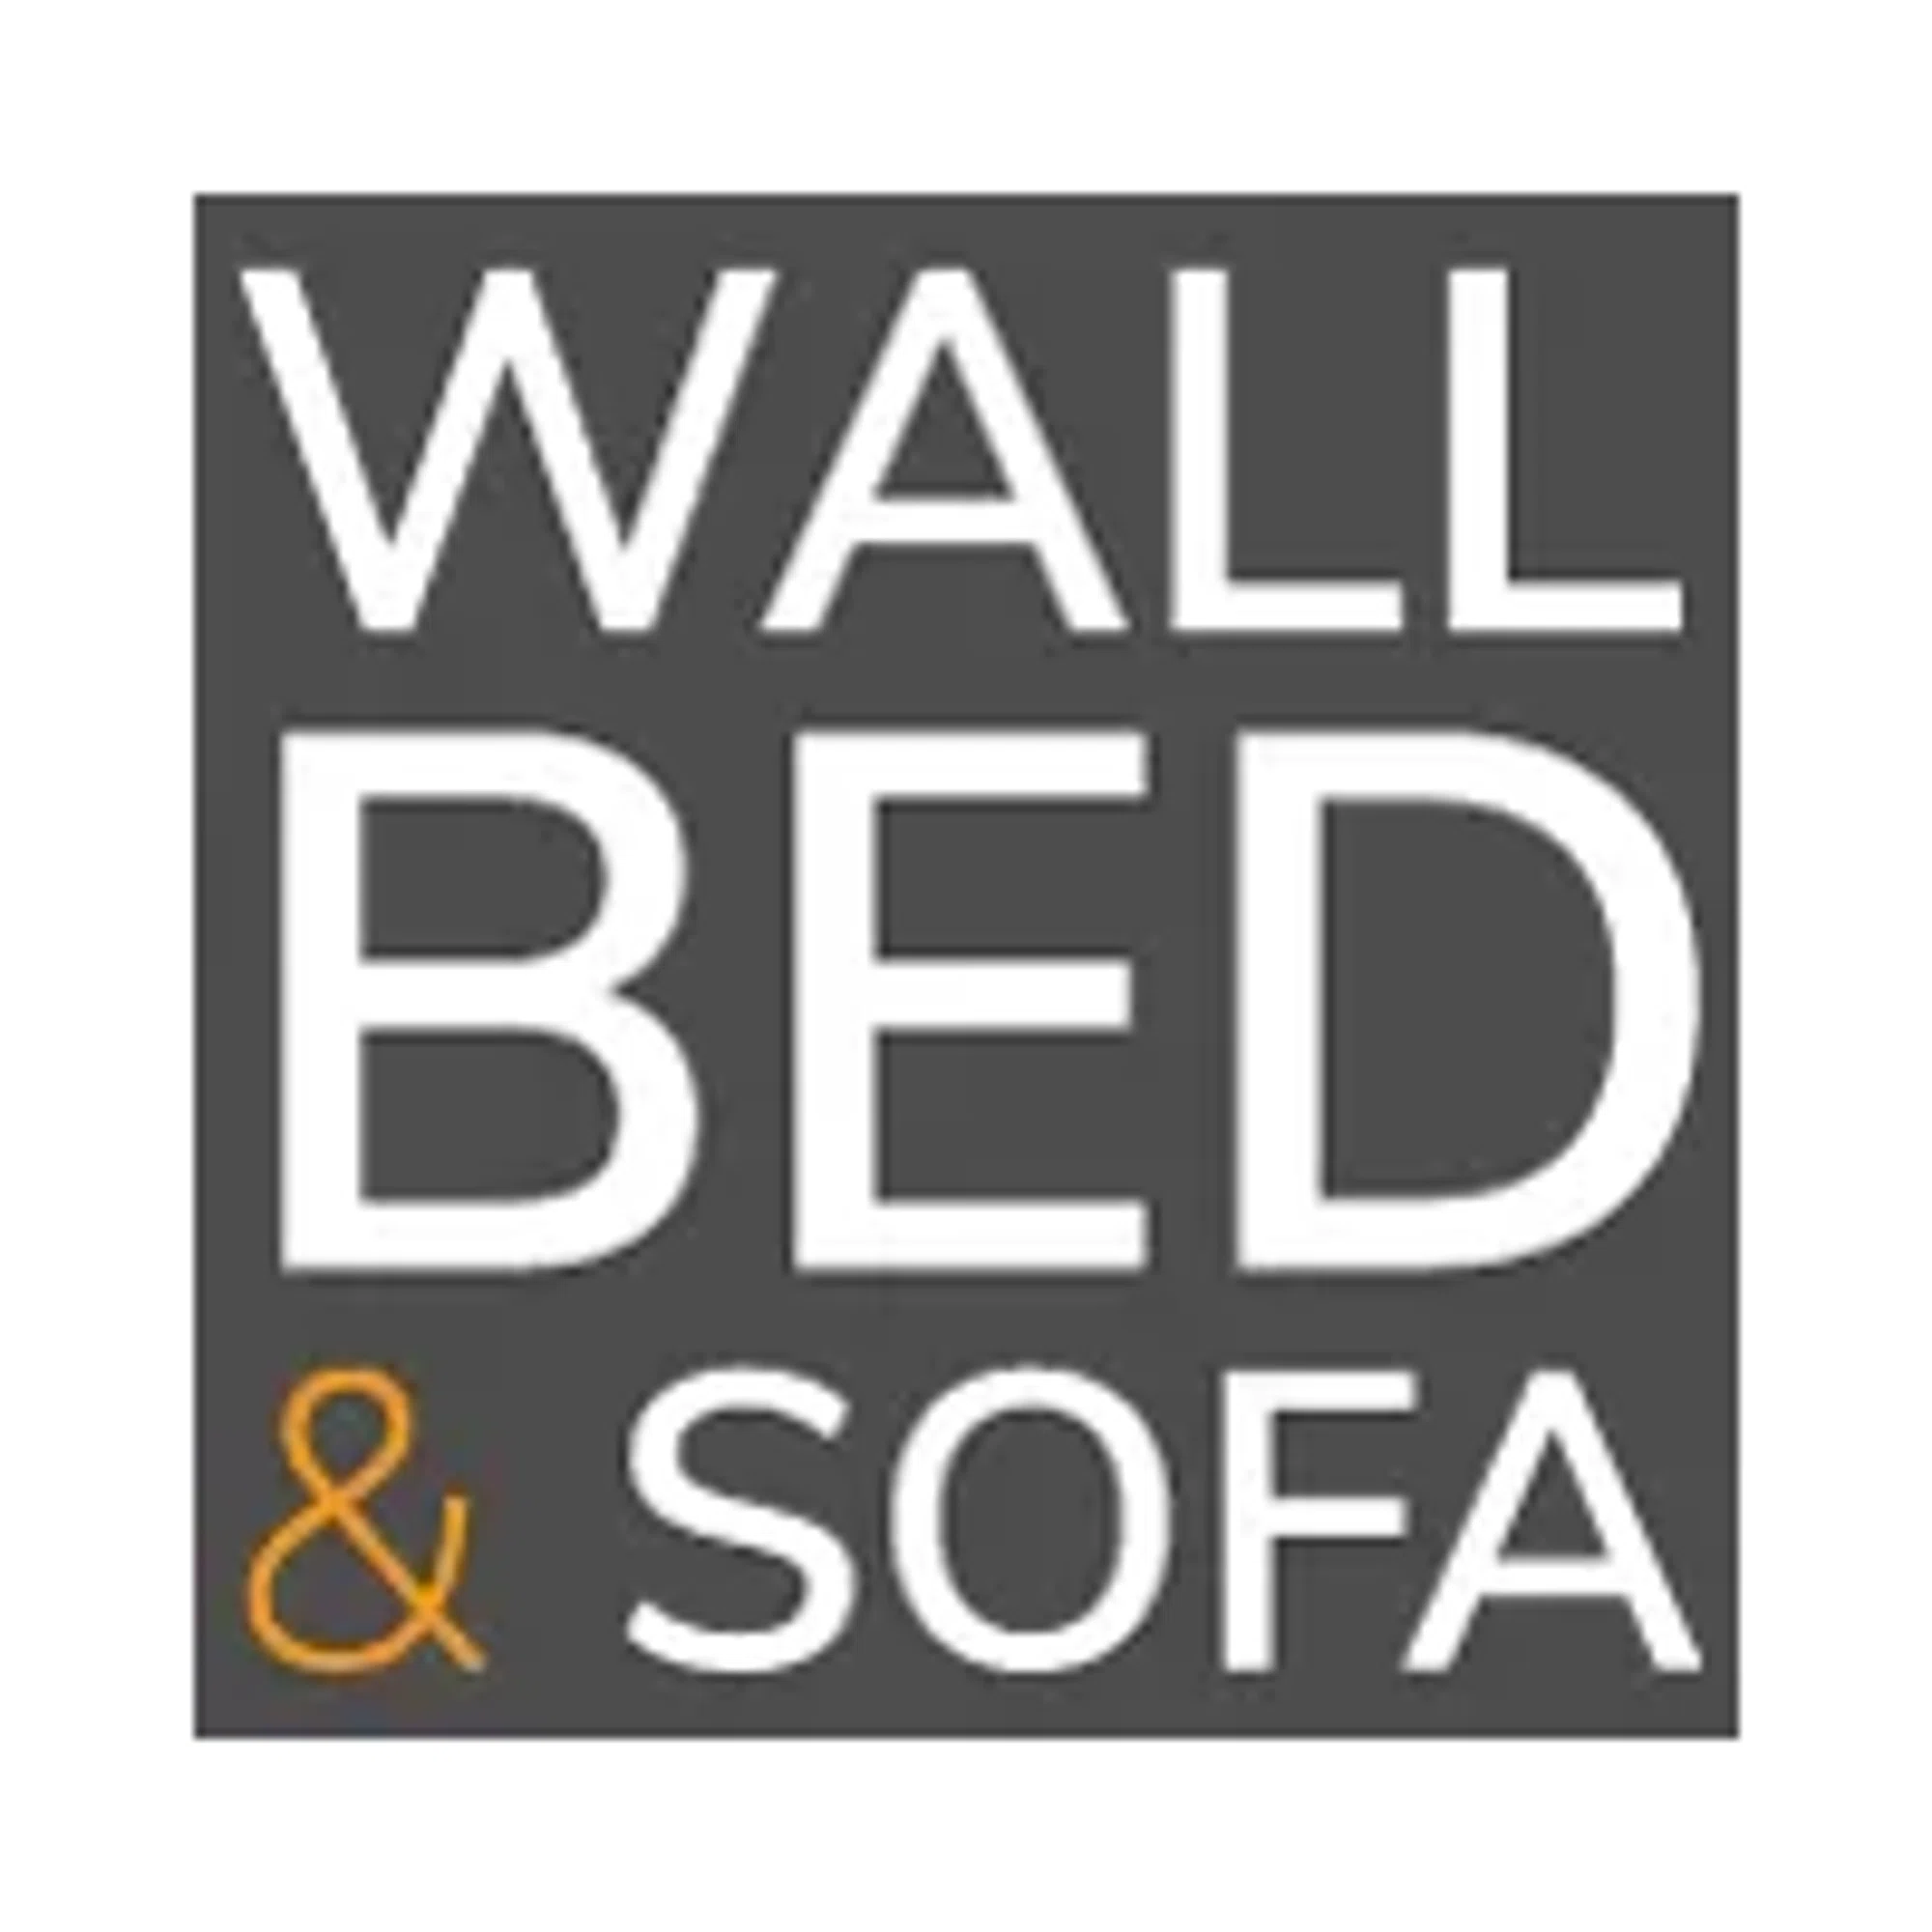 Wall Bed And Sofa